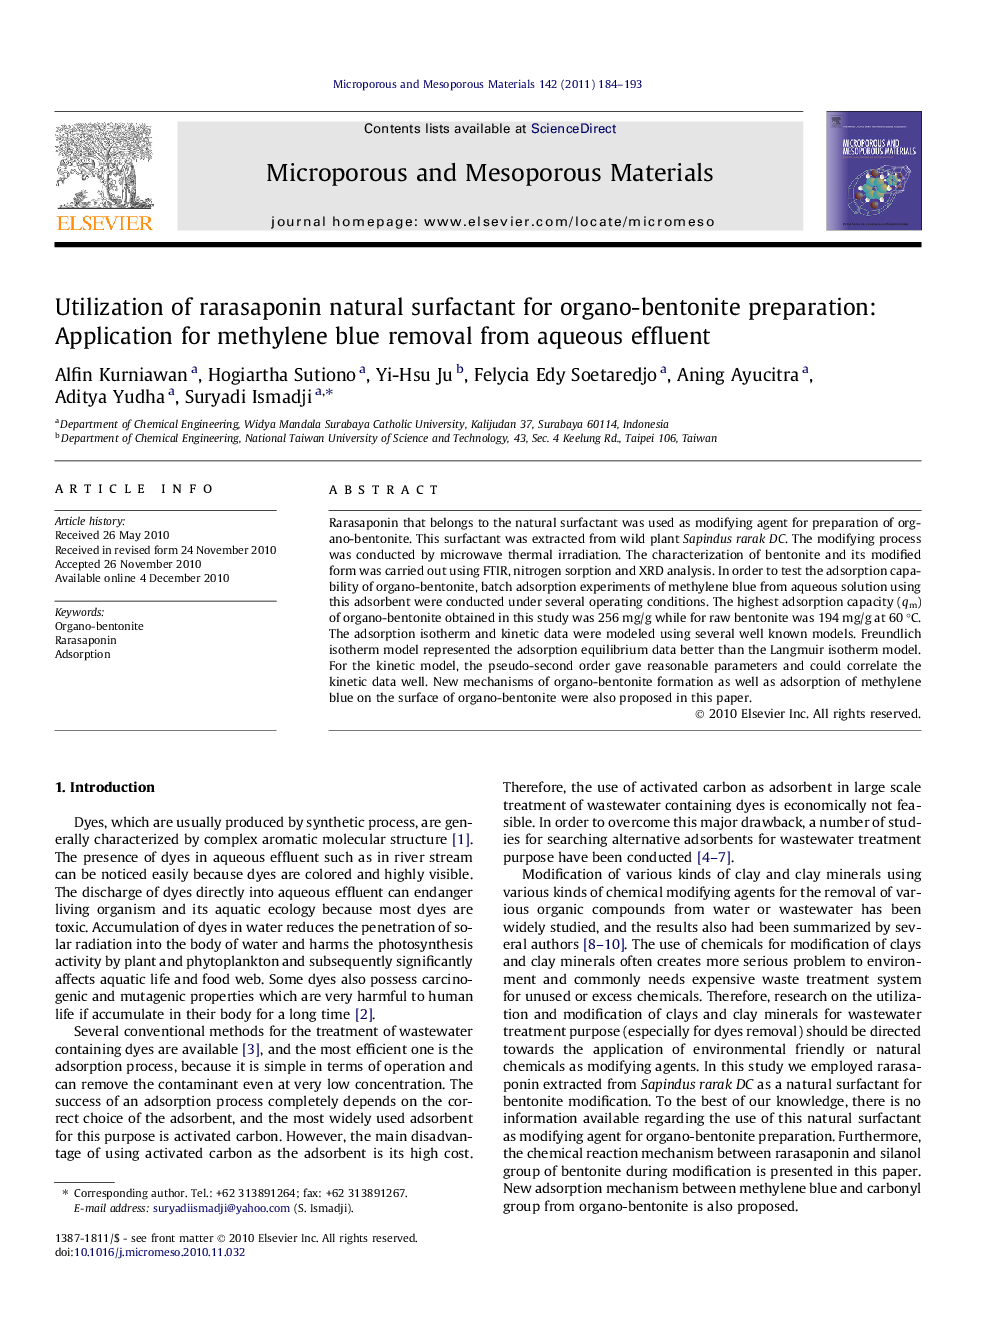 Utilization of rarasaponin natural surfactant for organo-bentonite preparation: Application for methylene blue removal from aqueous effluent